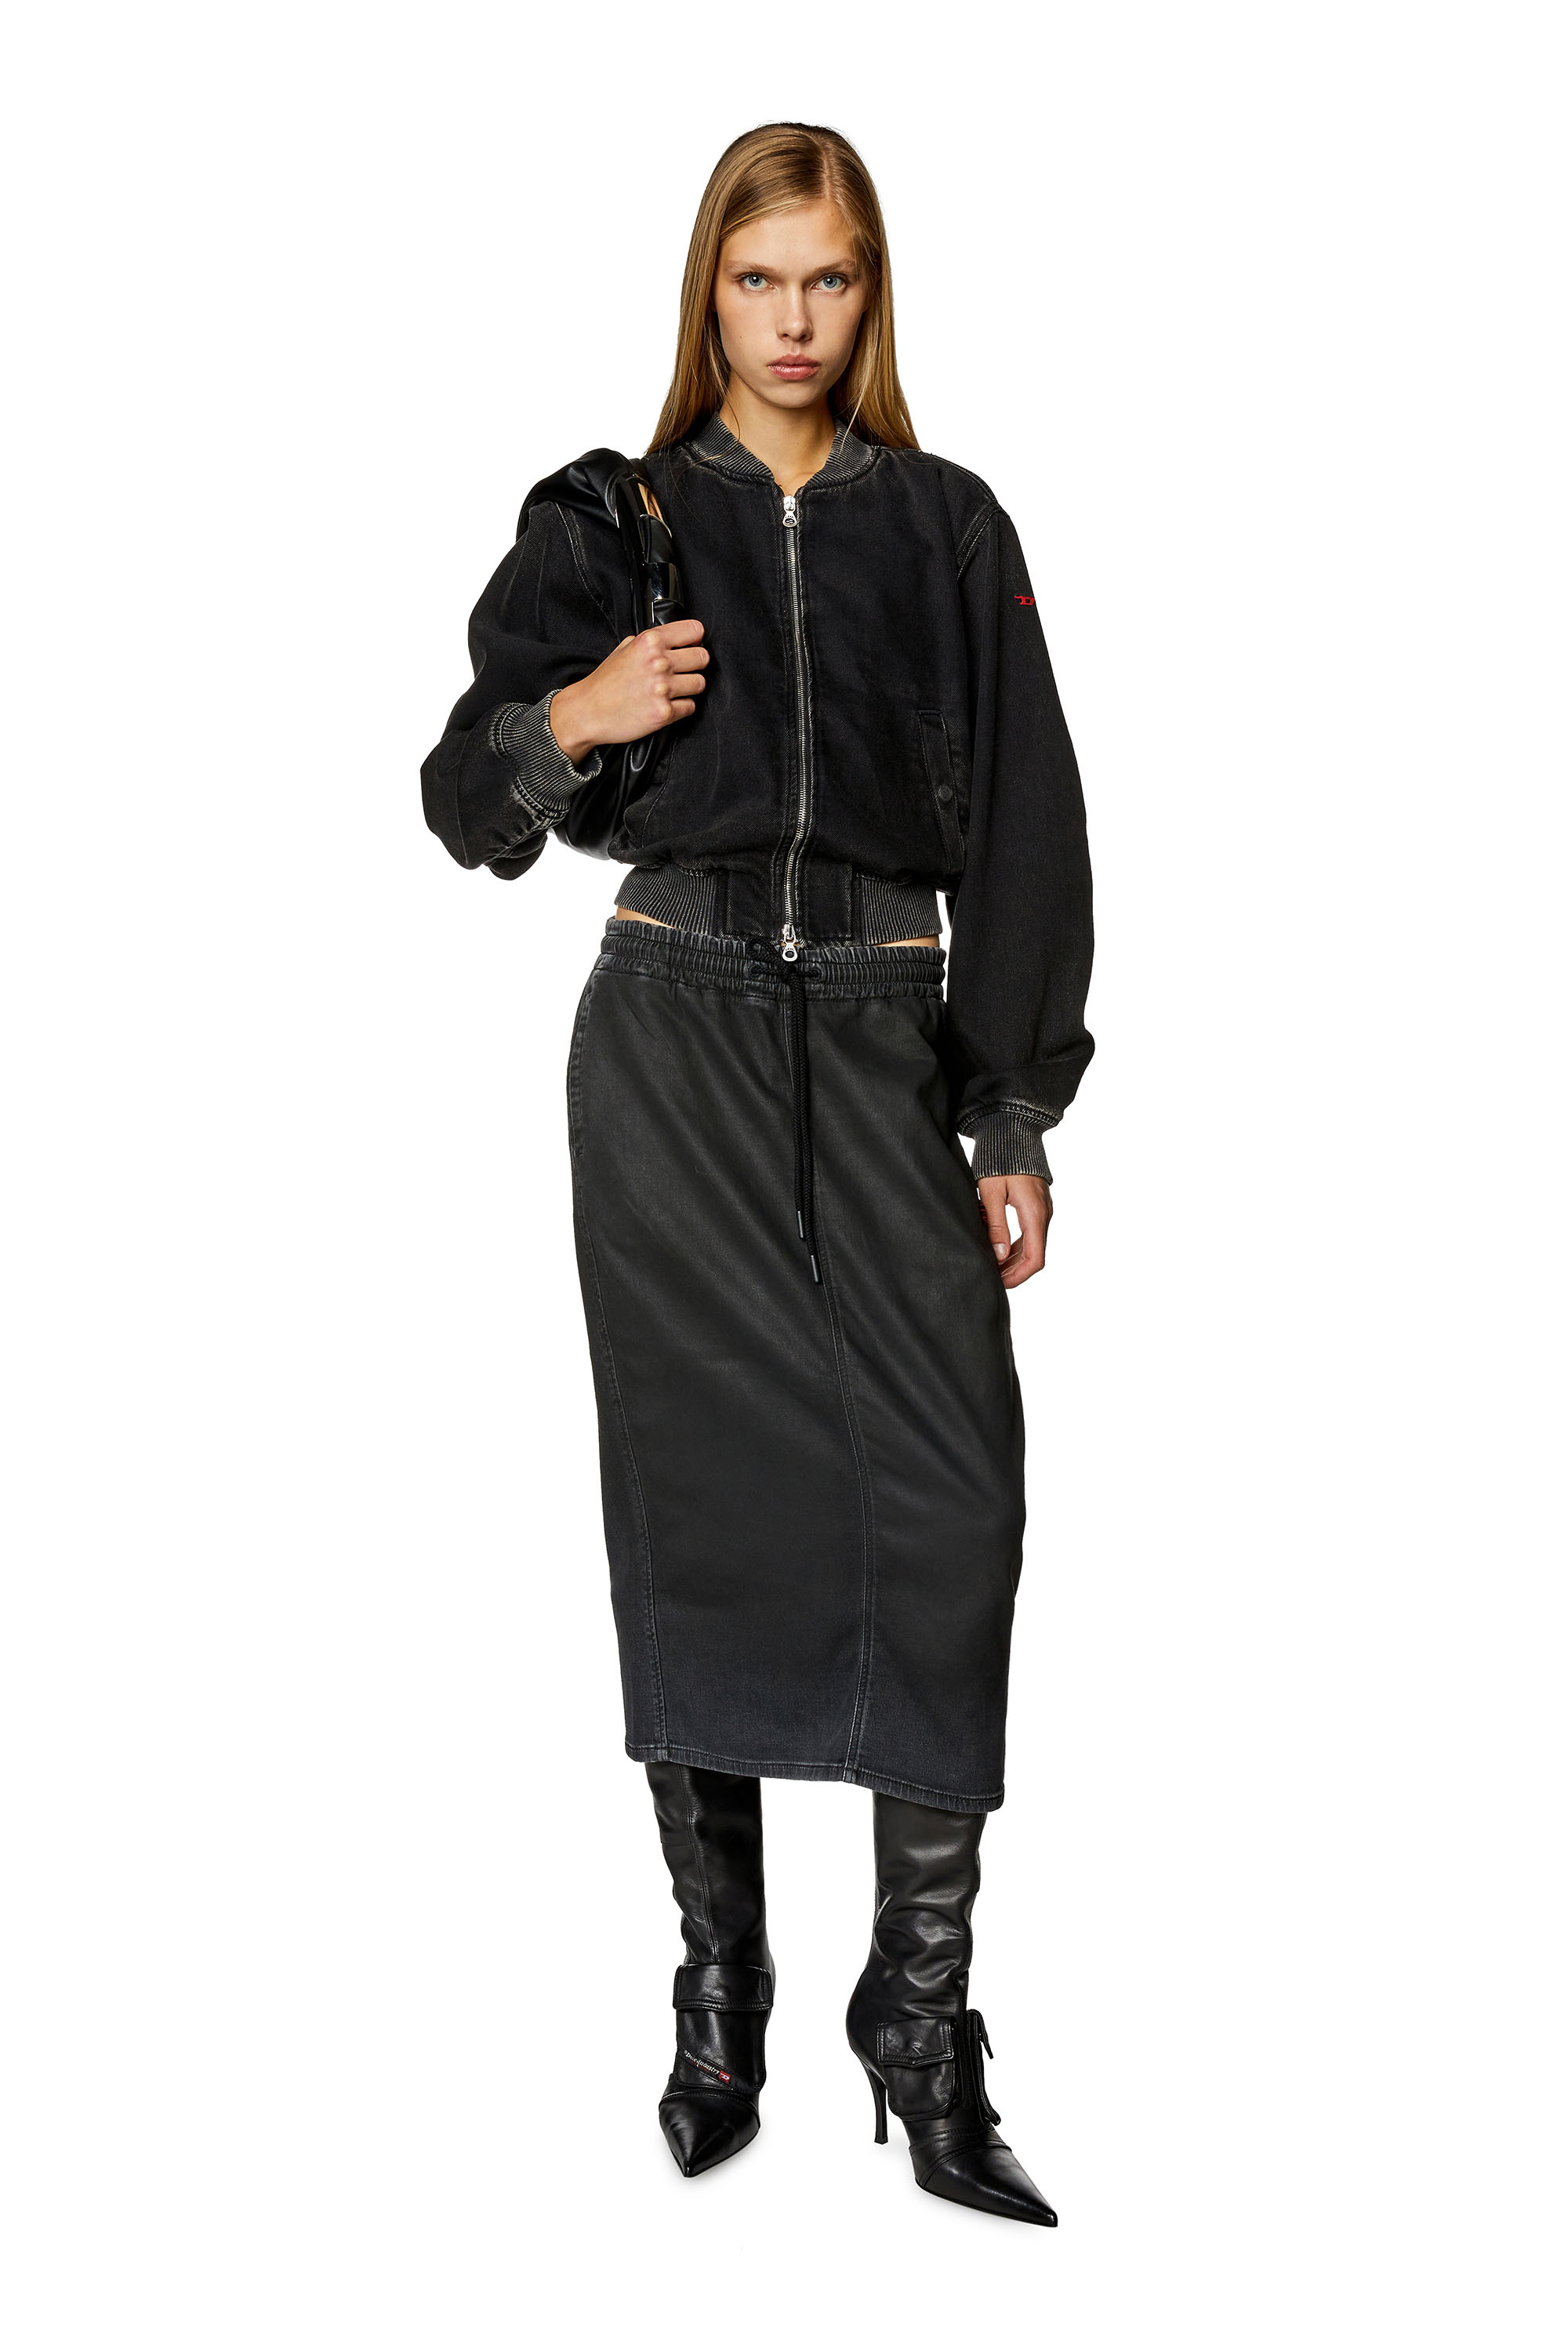 Diesel - DE-OREN JOGG, Woman Skirt in coated denim in Black - Image 1